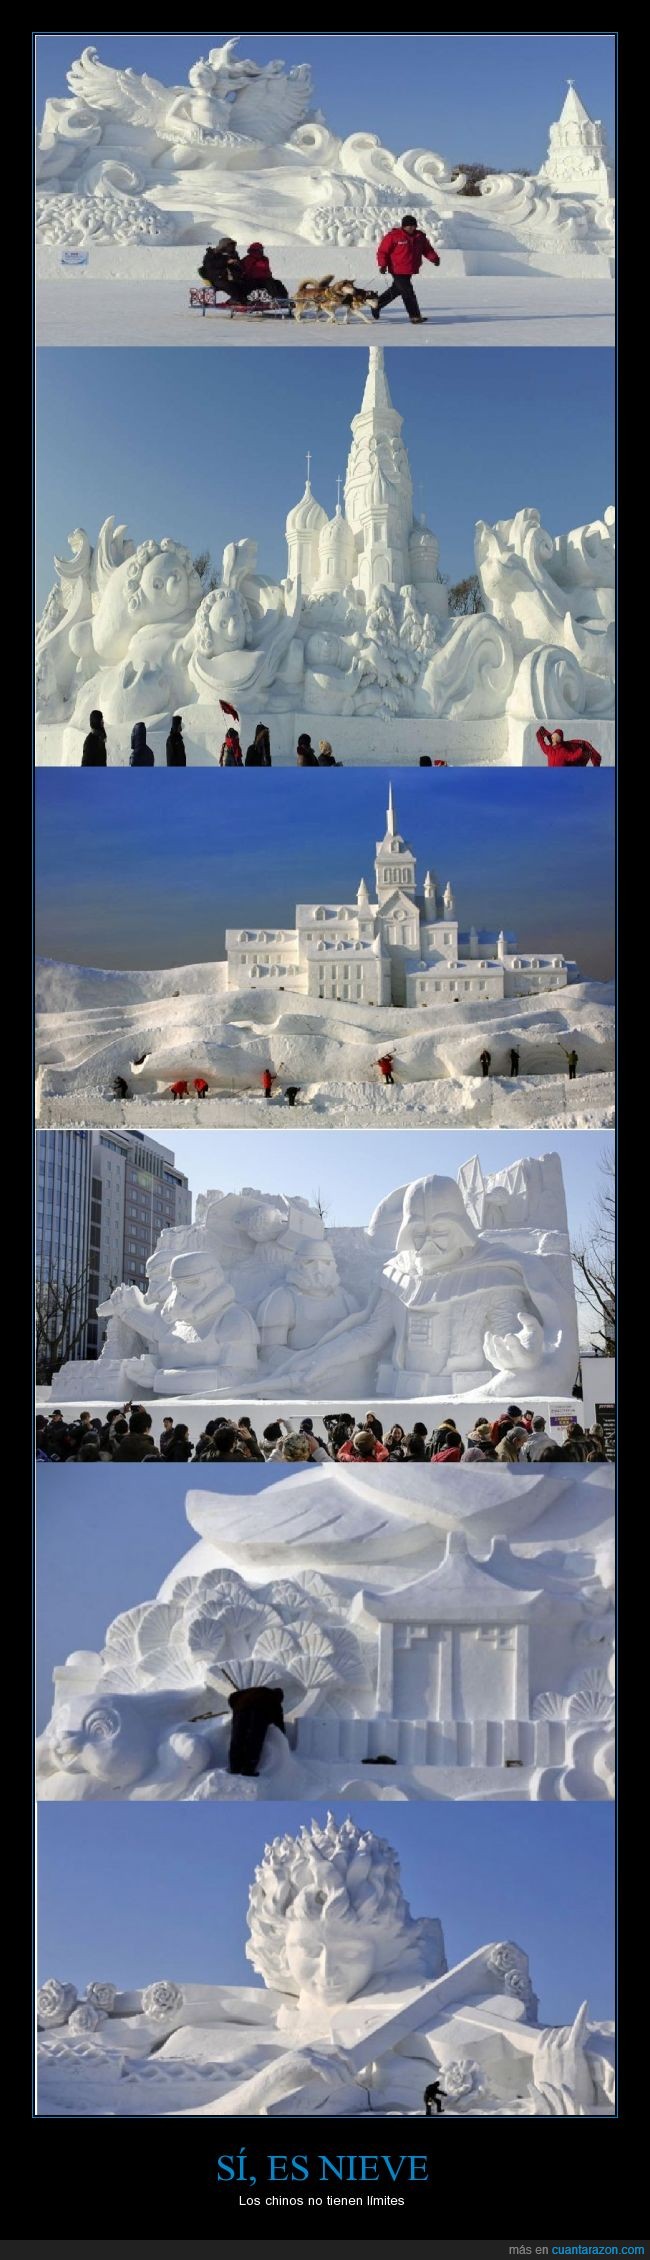 hielo,escultura,figura,estereotipo,China,nieve,esculturas,increíble,chinos,estupefacto